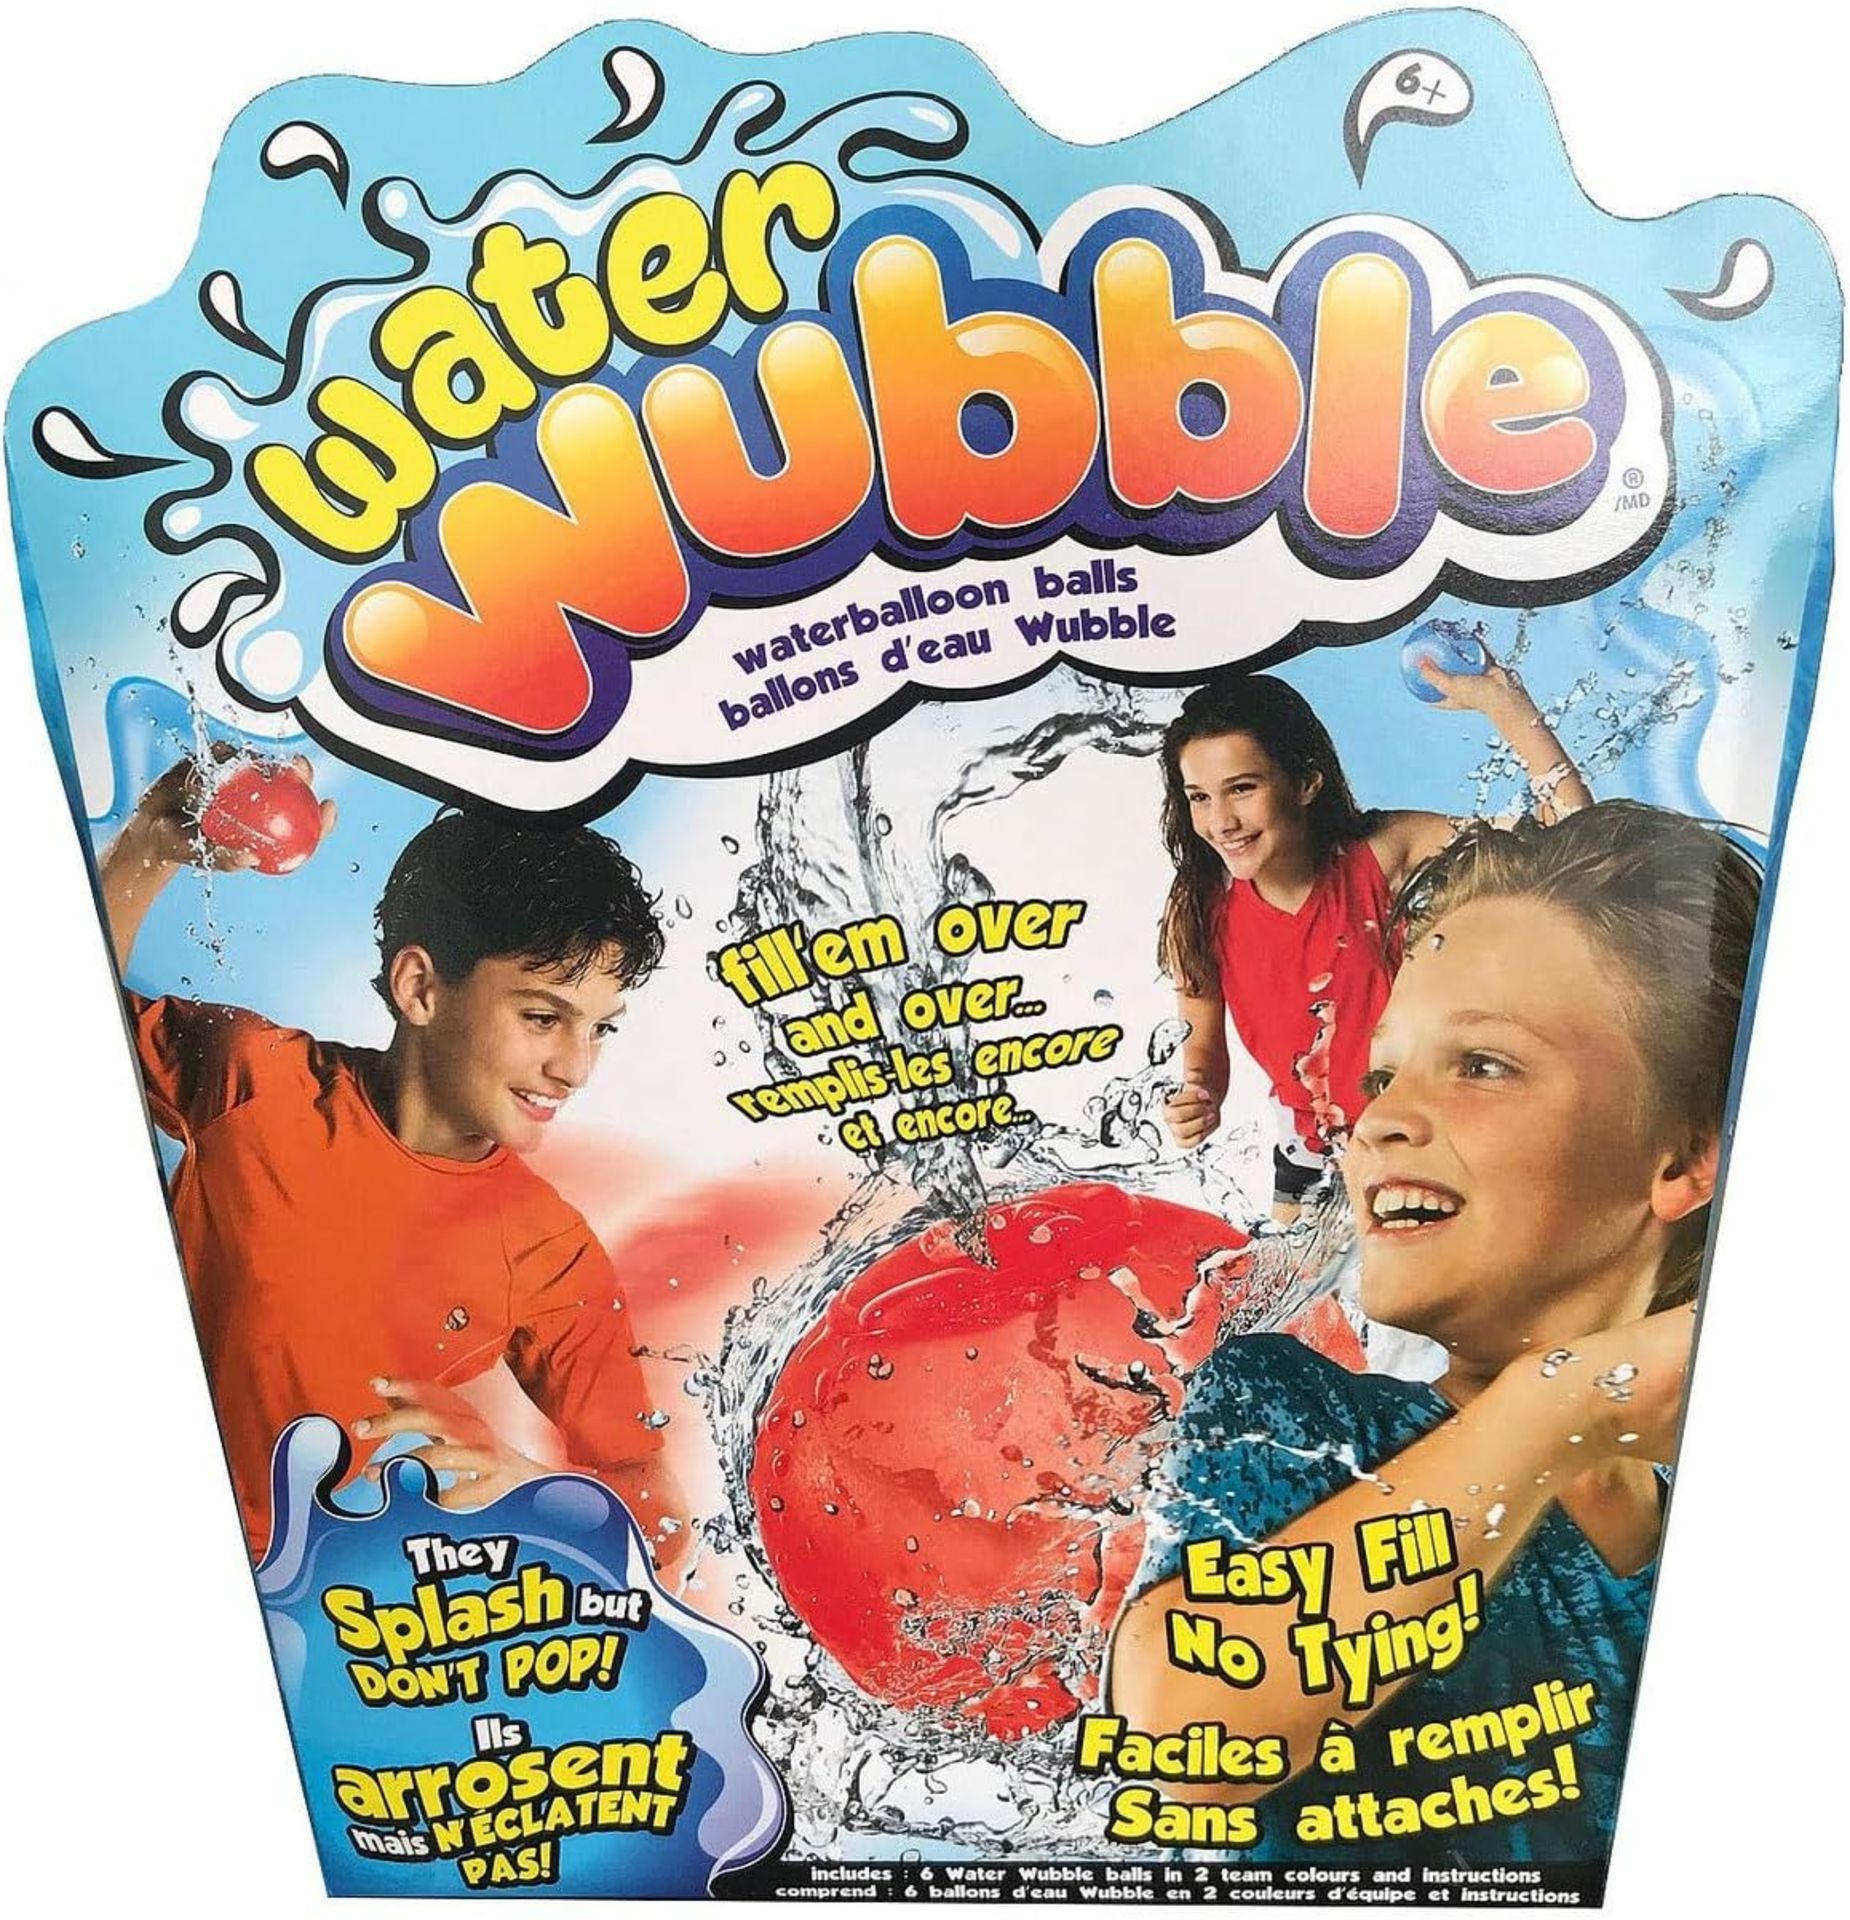 50 x Packs Water Wubble Waterballoon Balls | Total RRP £650